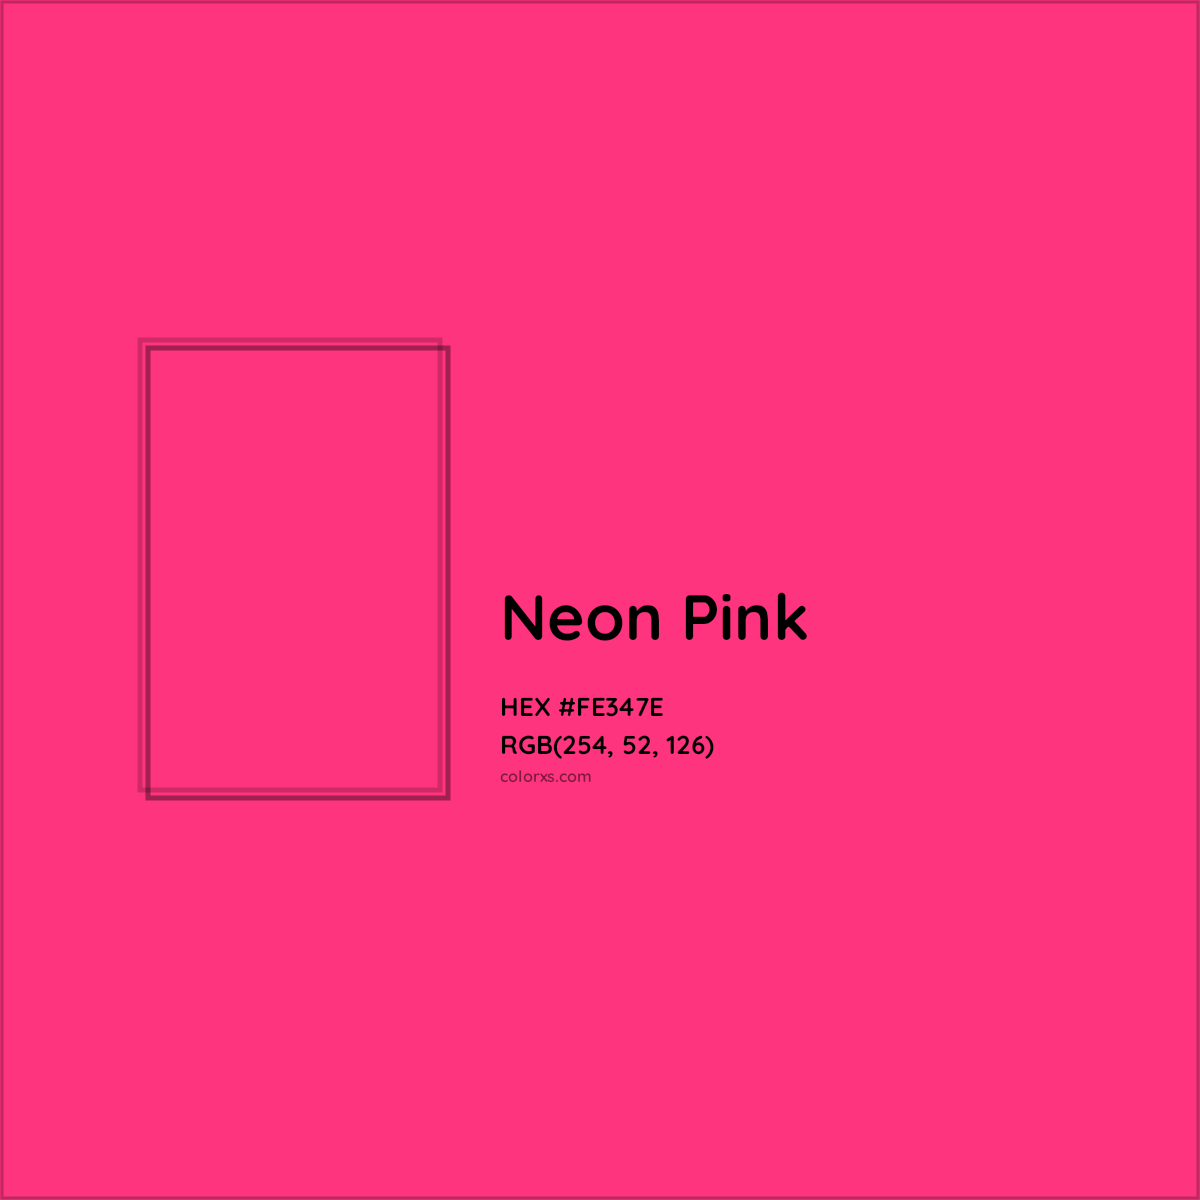 about-neon-pink-color-codes-similar-colors-palettes-and-paints-colorxs